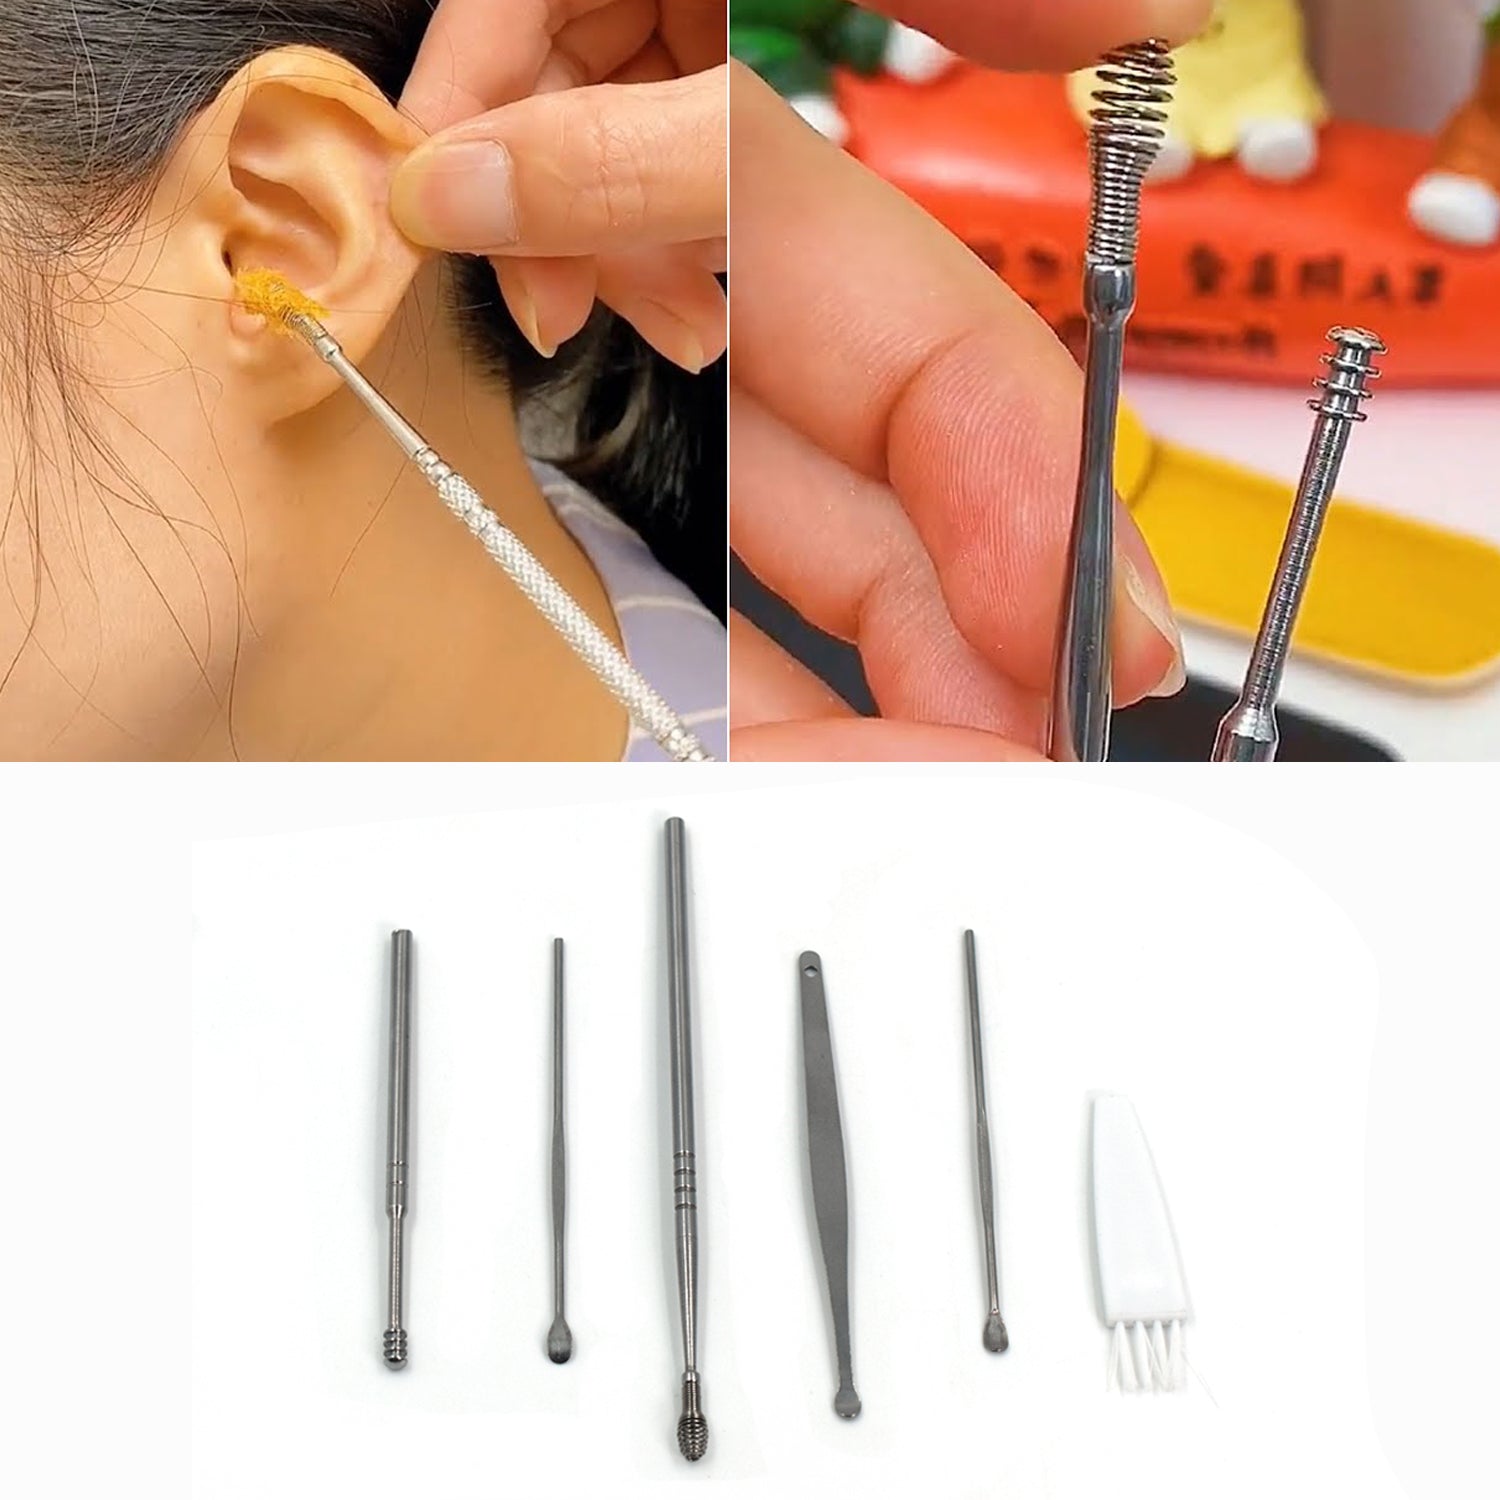 6314L 6Pcs Earwax Removal Kit | Ear Cleansing Tool Set | Ear Curette Ear Wax Remover Tool (loose pack) DeoDap